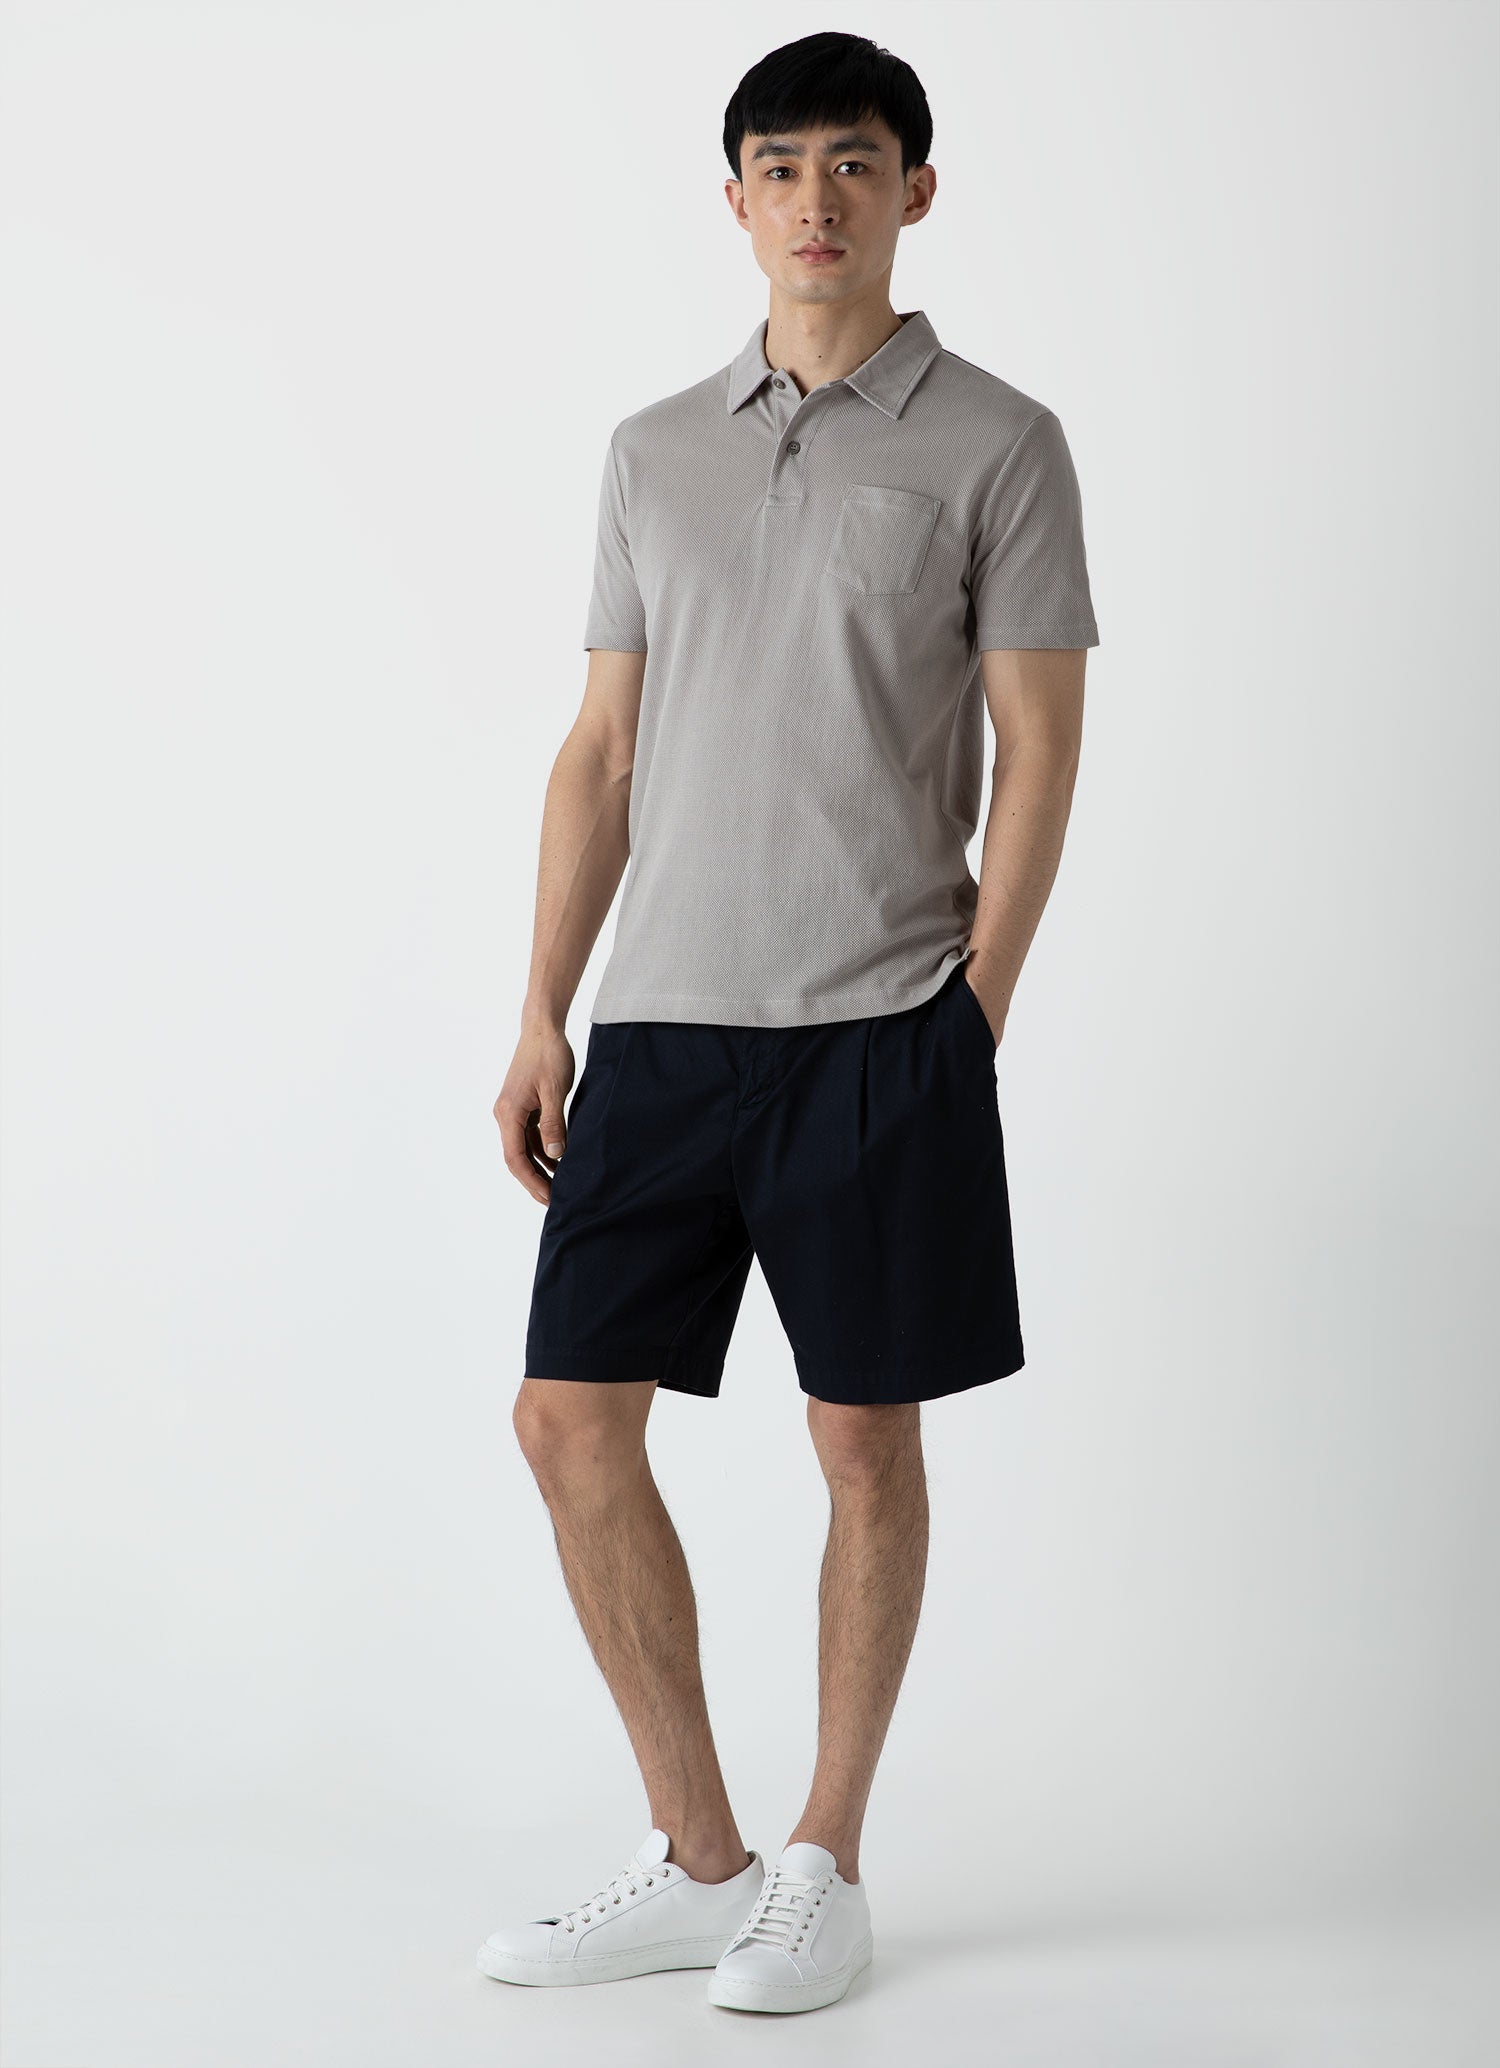 Men's Riviera Polo Shirt in Mid Grey